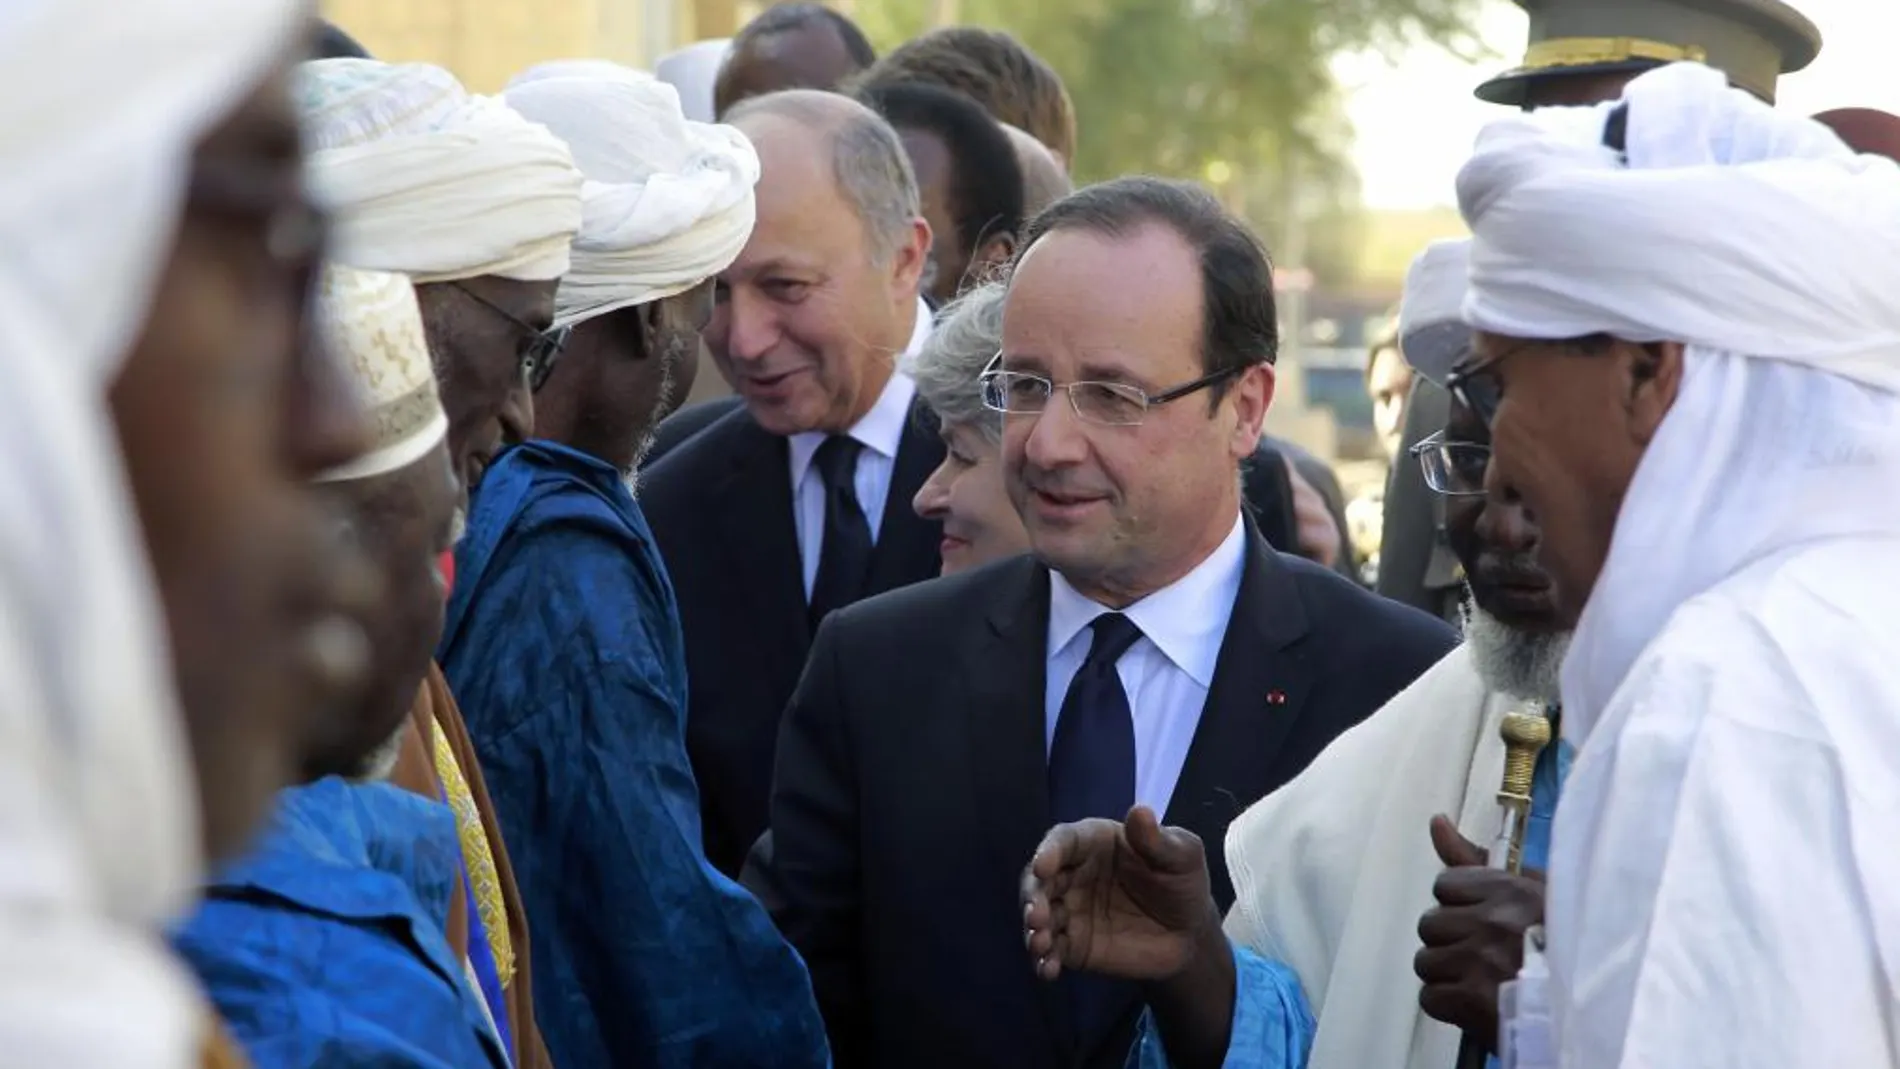 El presidene francés a su llegada a Timbuktu (Mali)